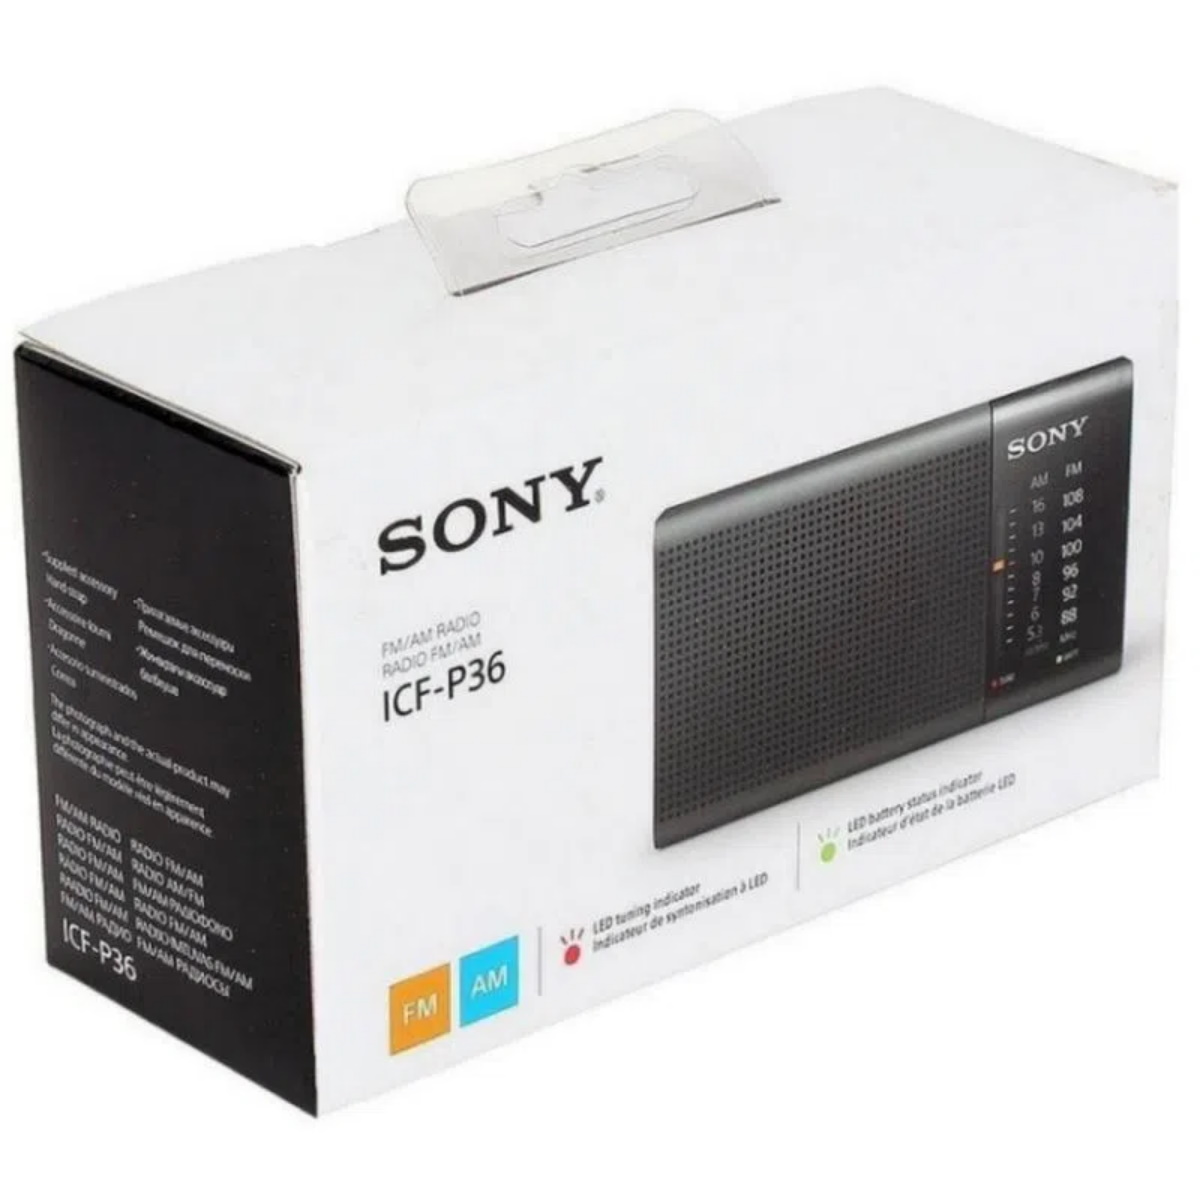 Radio portátil Sony ICF-P36 - ivan1aguero - ID 1002890